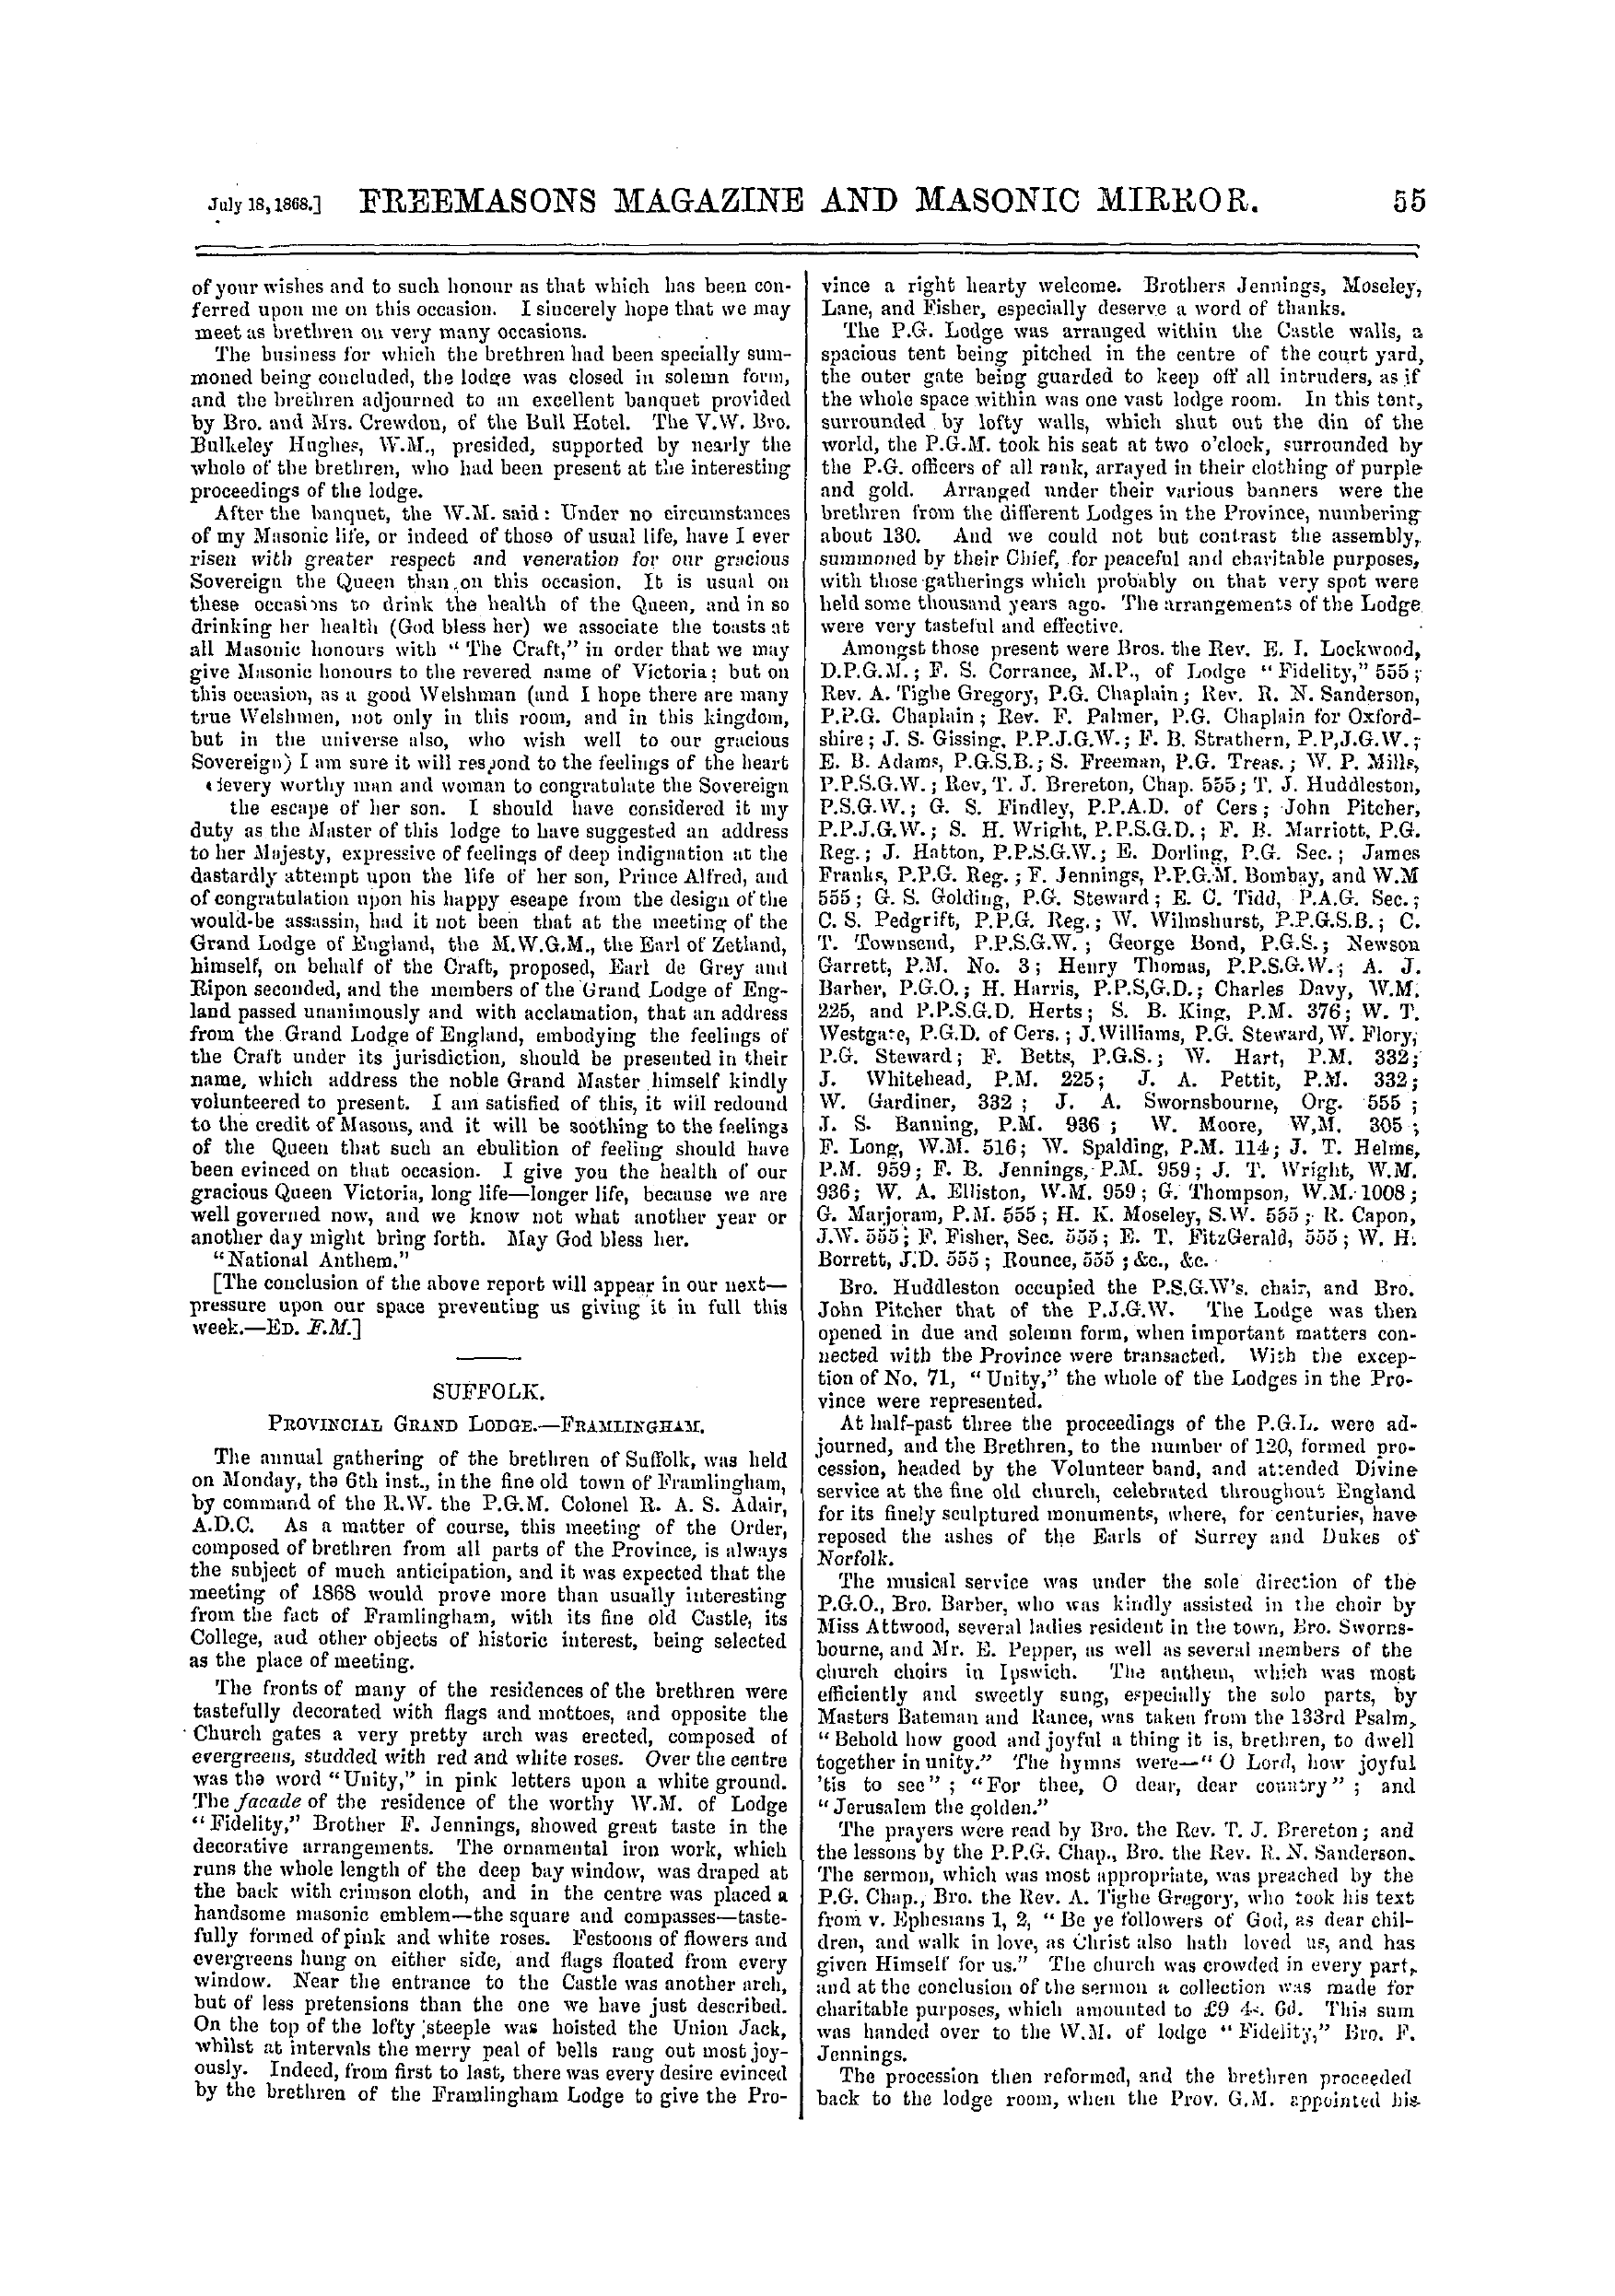 The Freemasons' Monthly Magazine: 1868-07-18 - Suffolk.